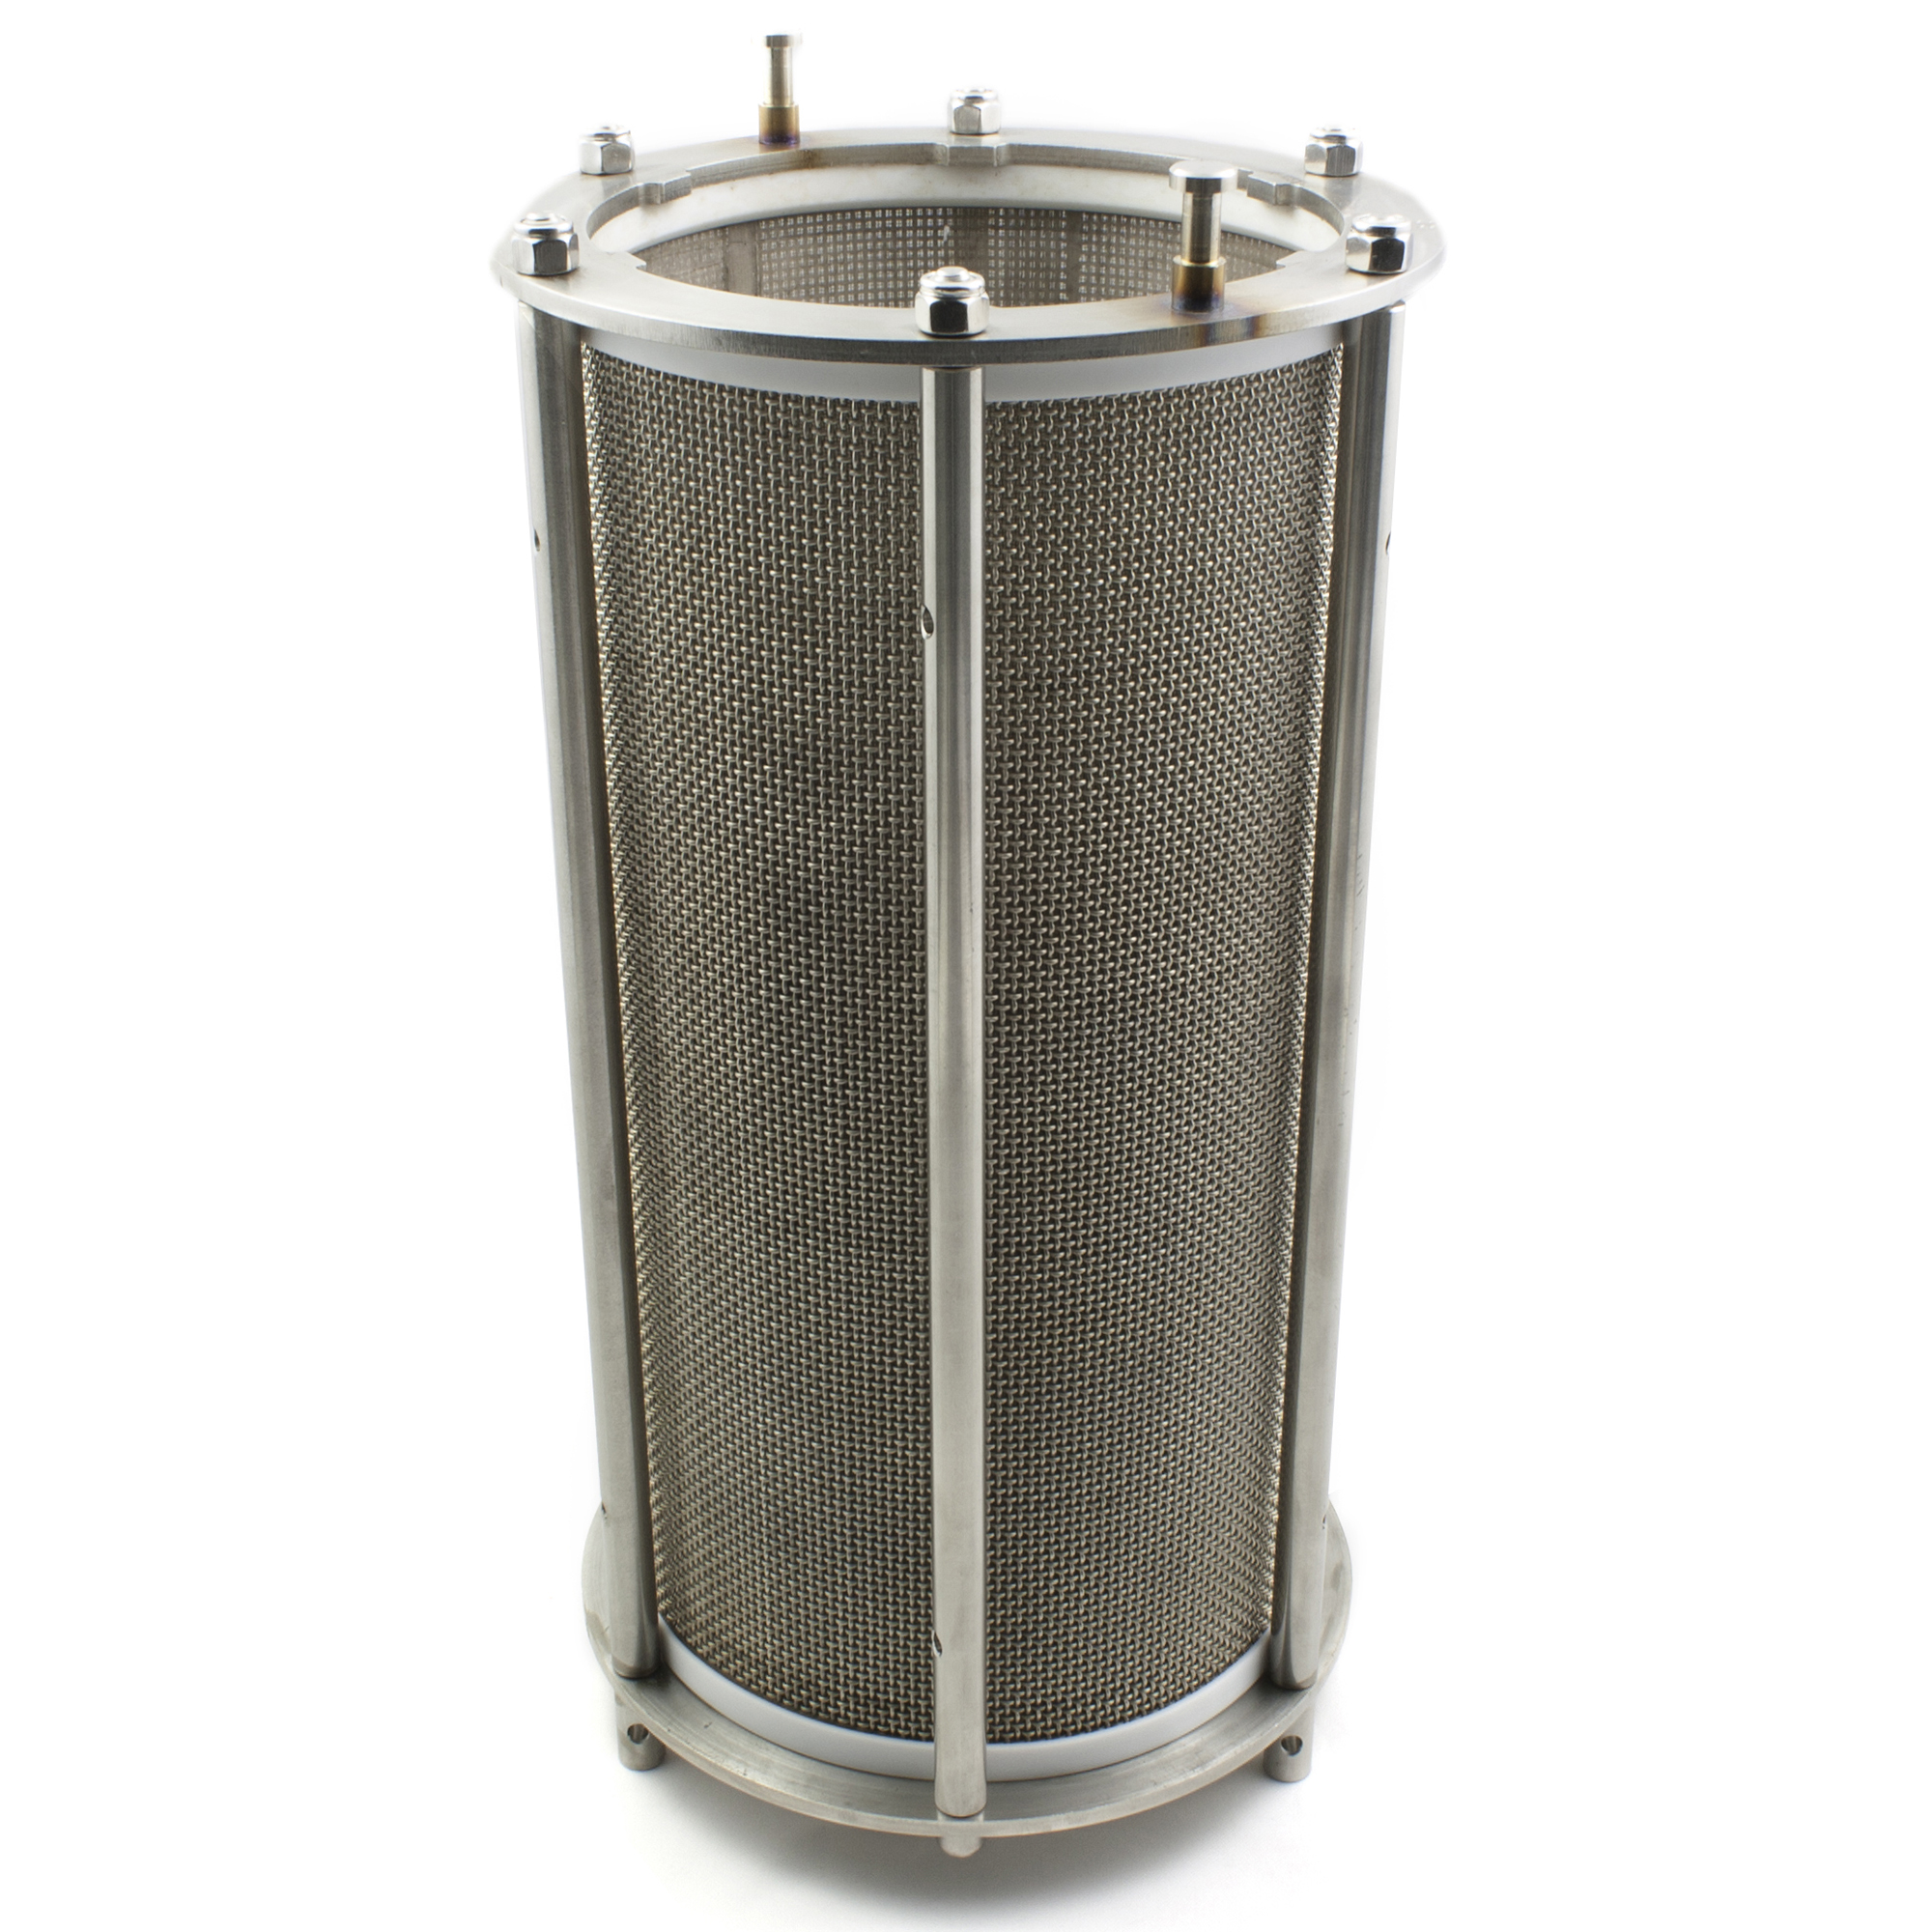 CONT 75-PV5X010 Washing drum 0.063 mm mesh